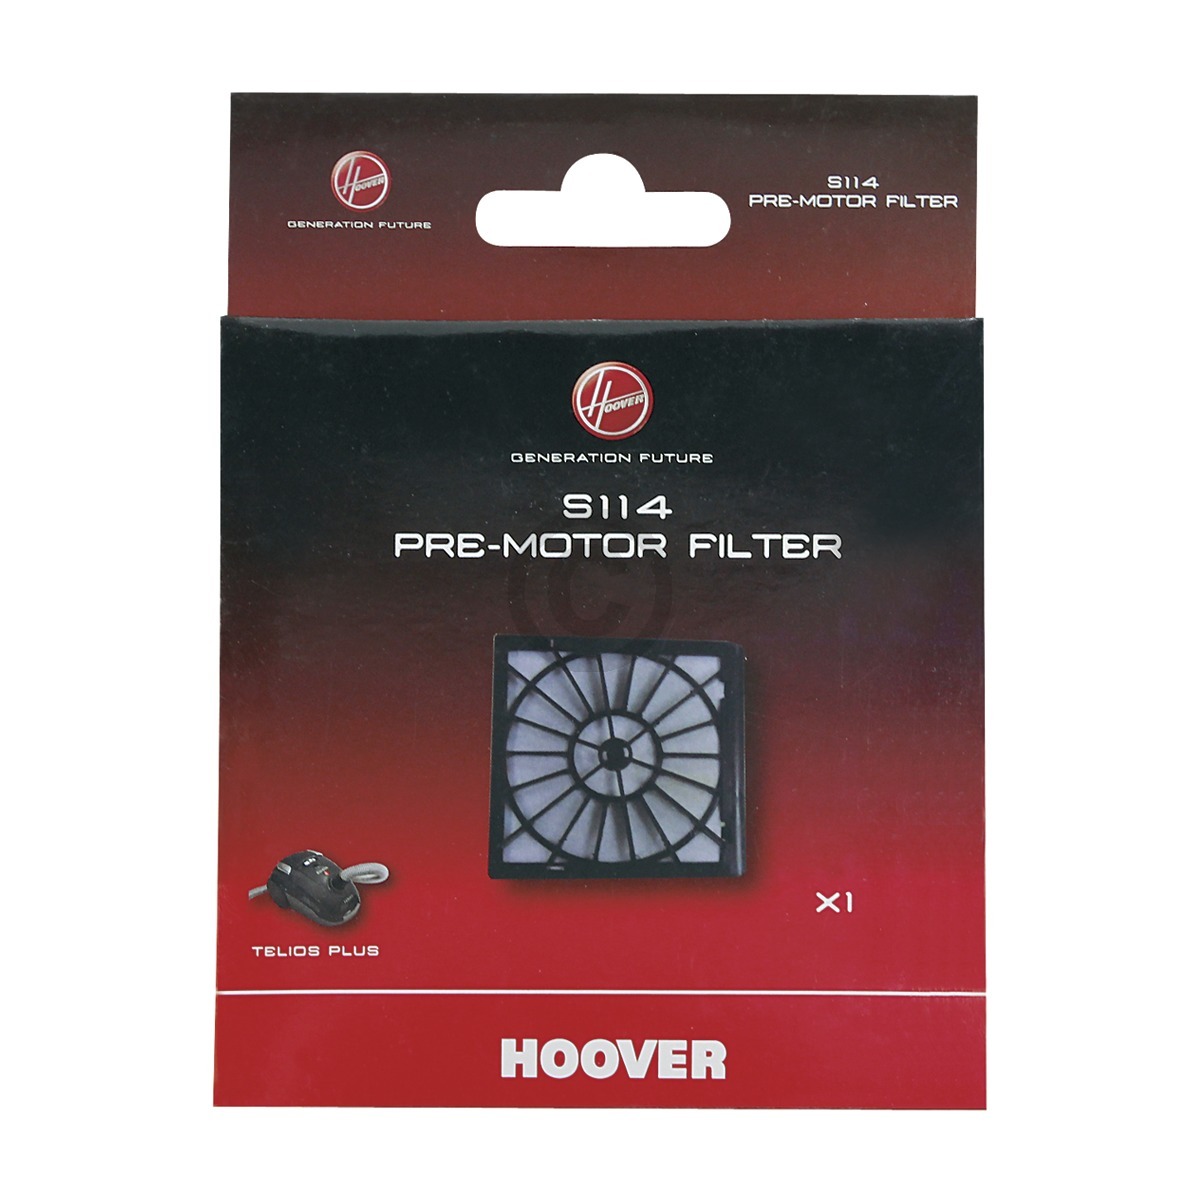 Filter Motorschutzfilter Kassette Hoover S114 35601288 für Staubsauger